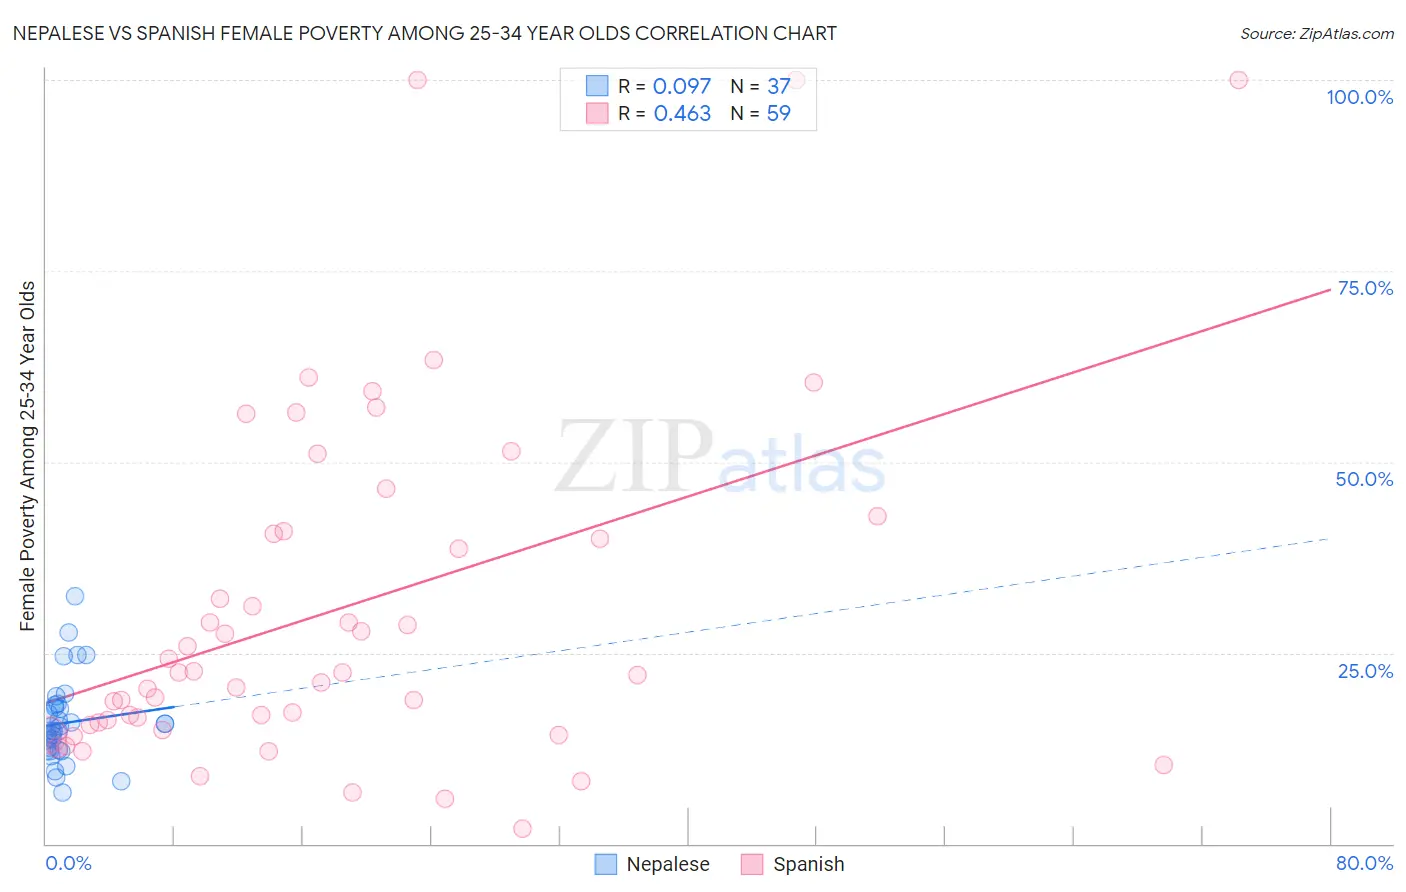 Nepalese vs Spanish Female Poverty Among 25-34 Year Olds